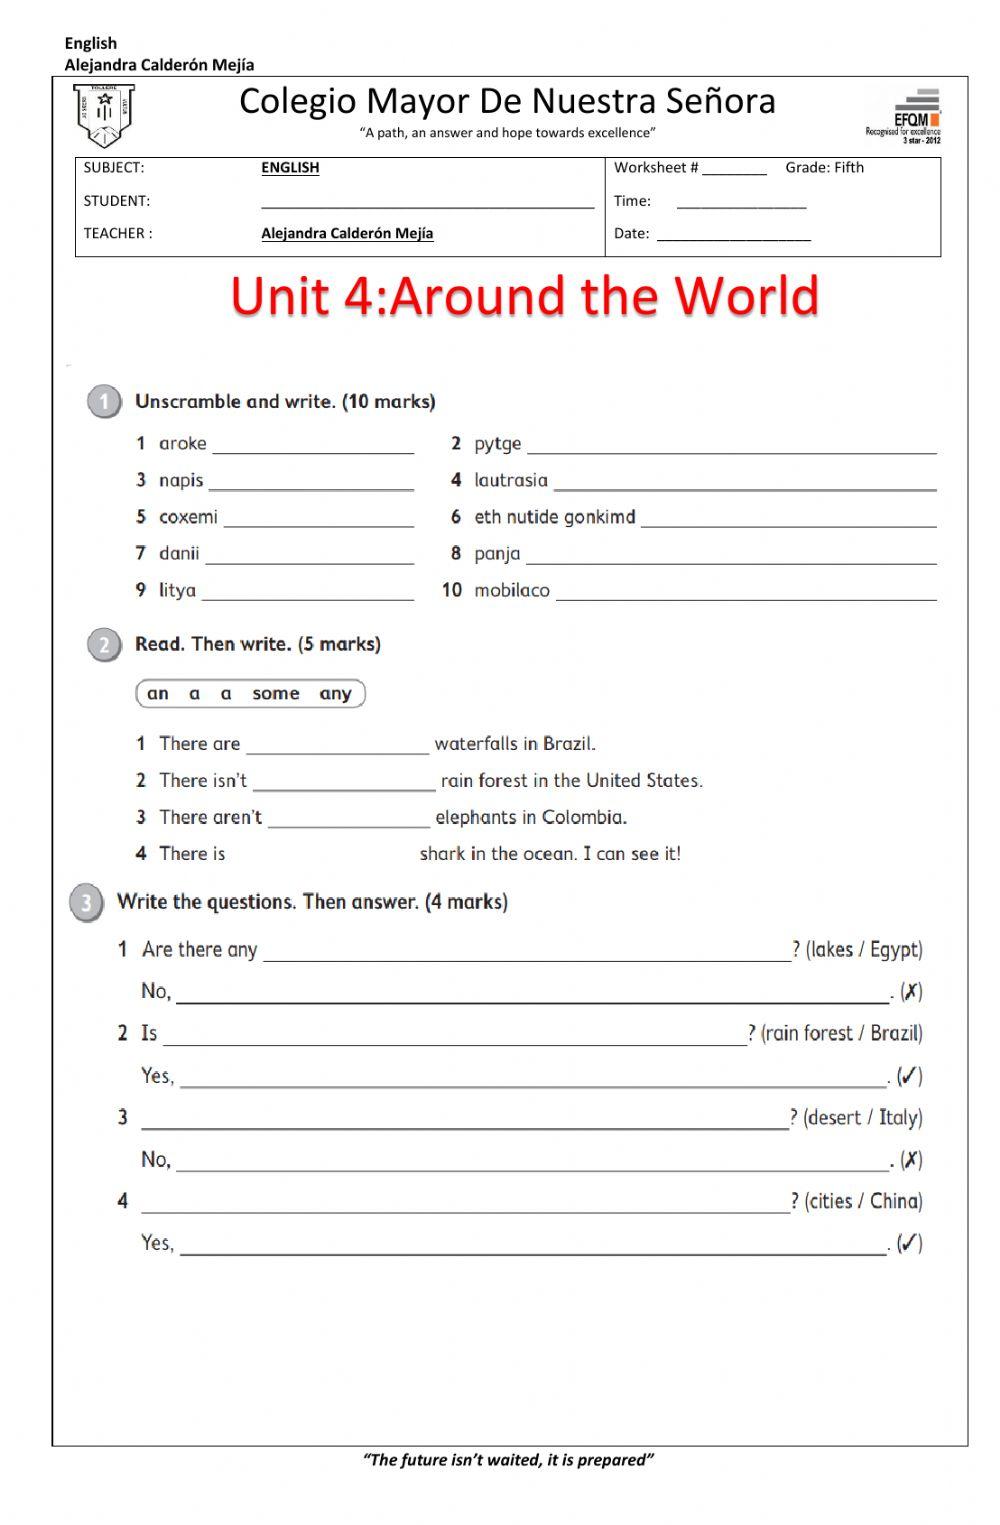 Unit 4: around the world